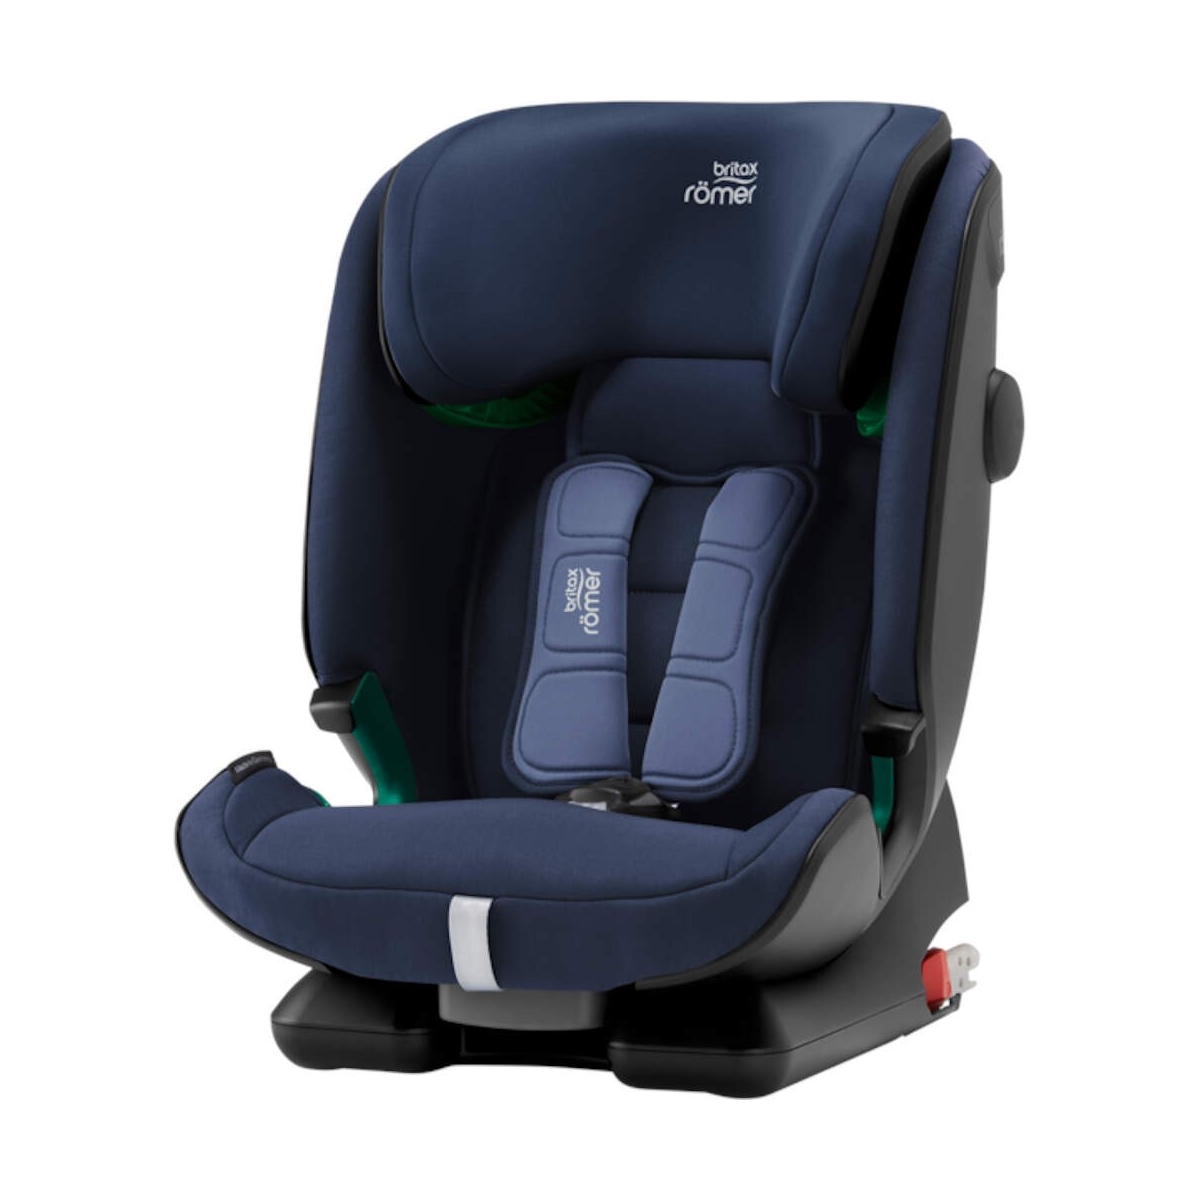 Britax Advansafix i-Size Group 1/2/3 Car Seat